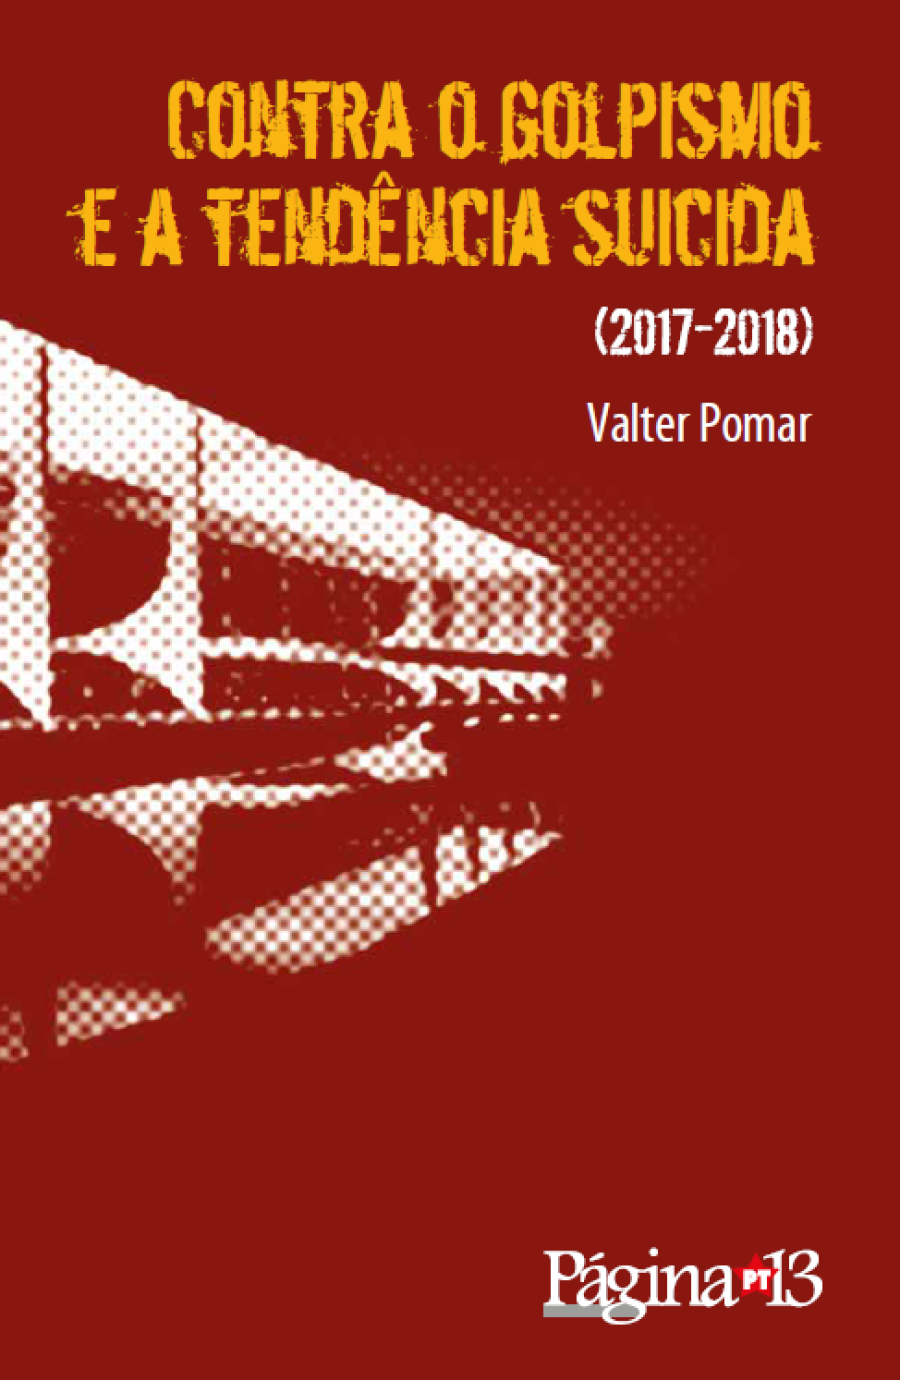 Contra o golpismo 2017-2018 por Valter Pomar